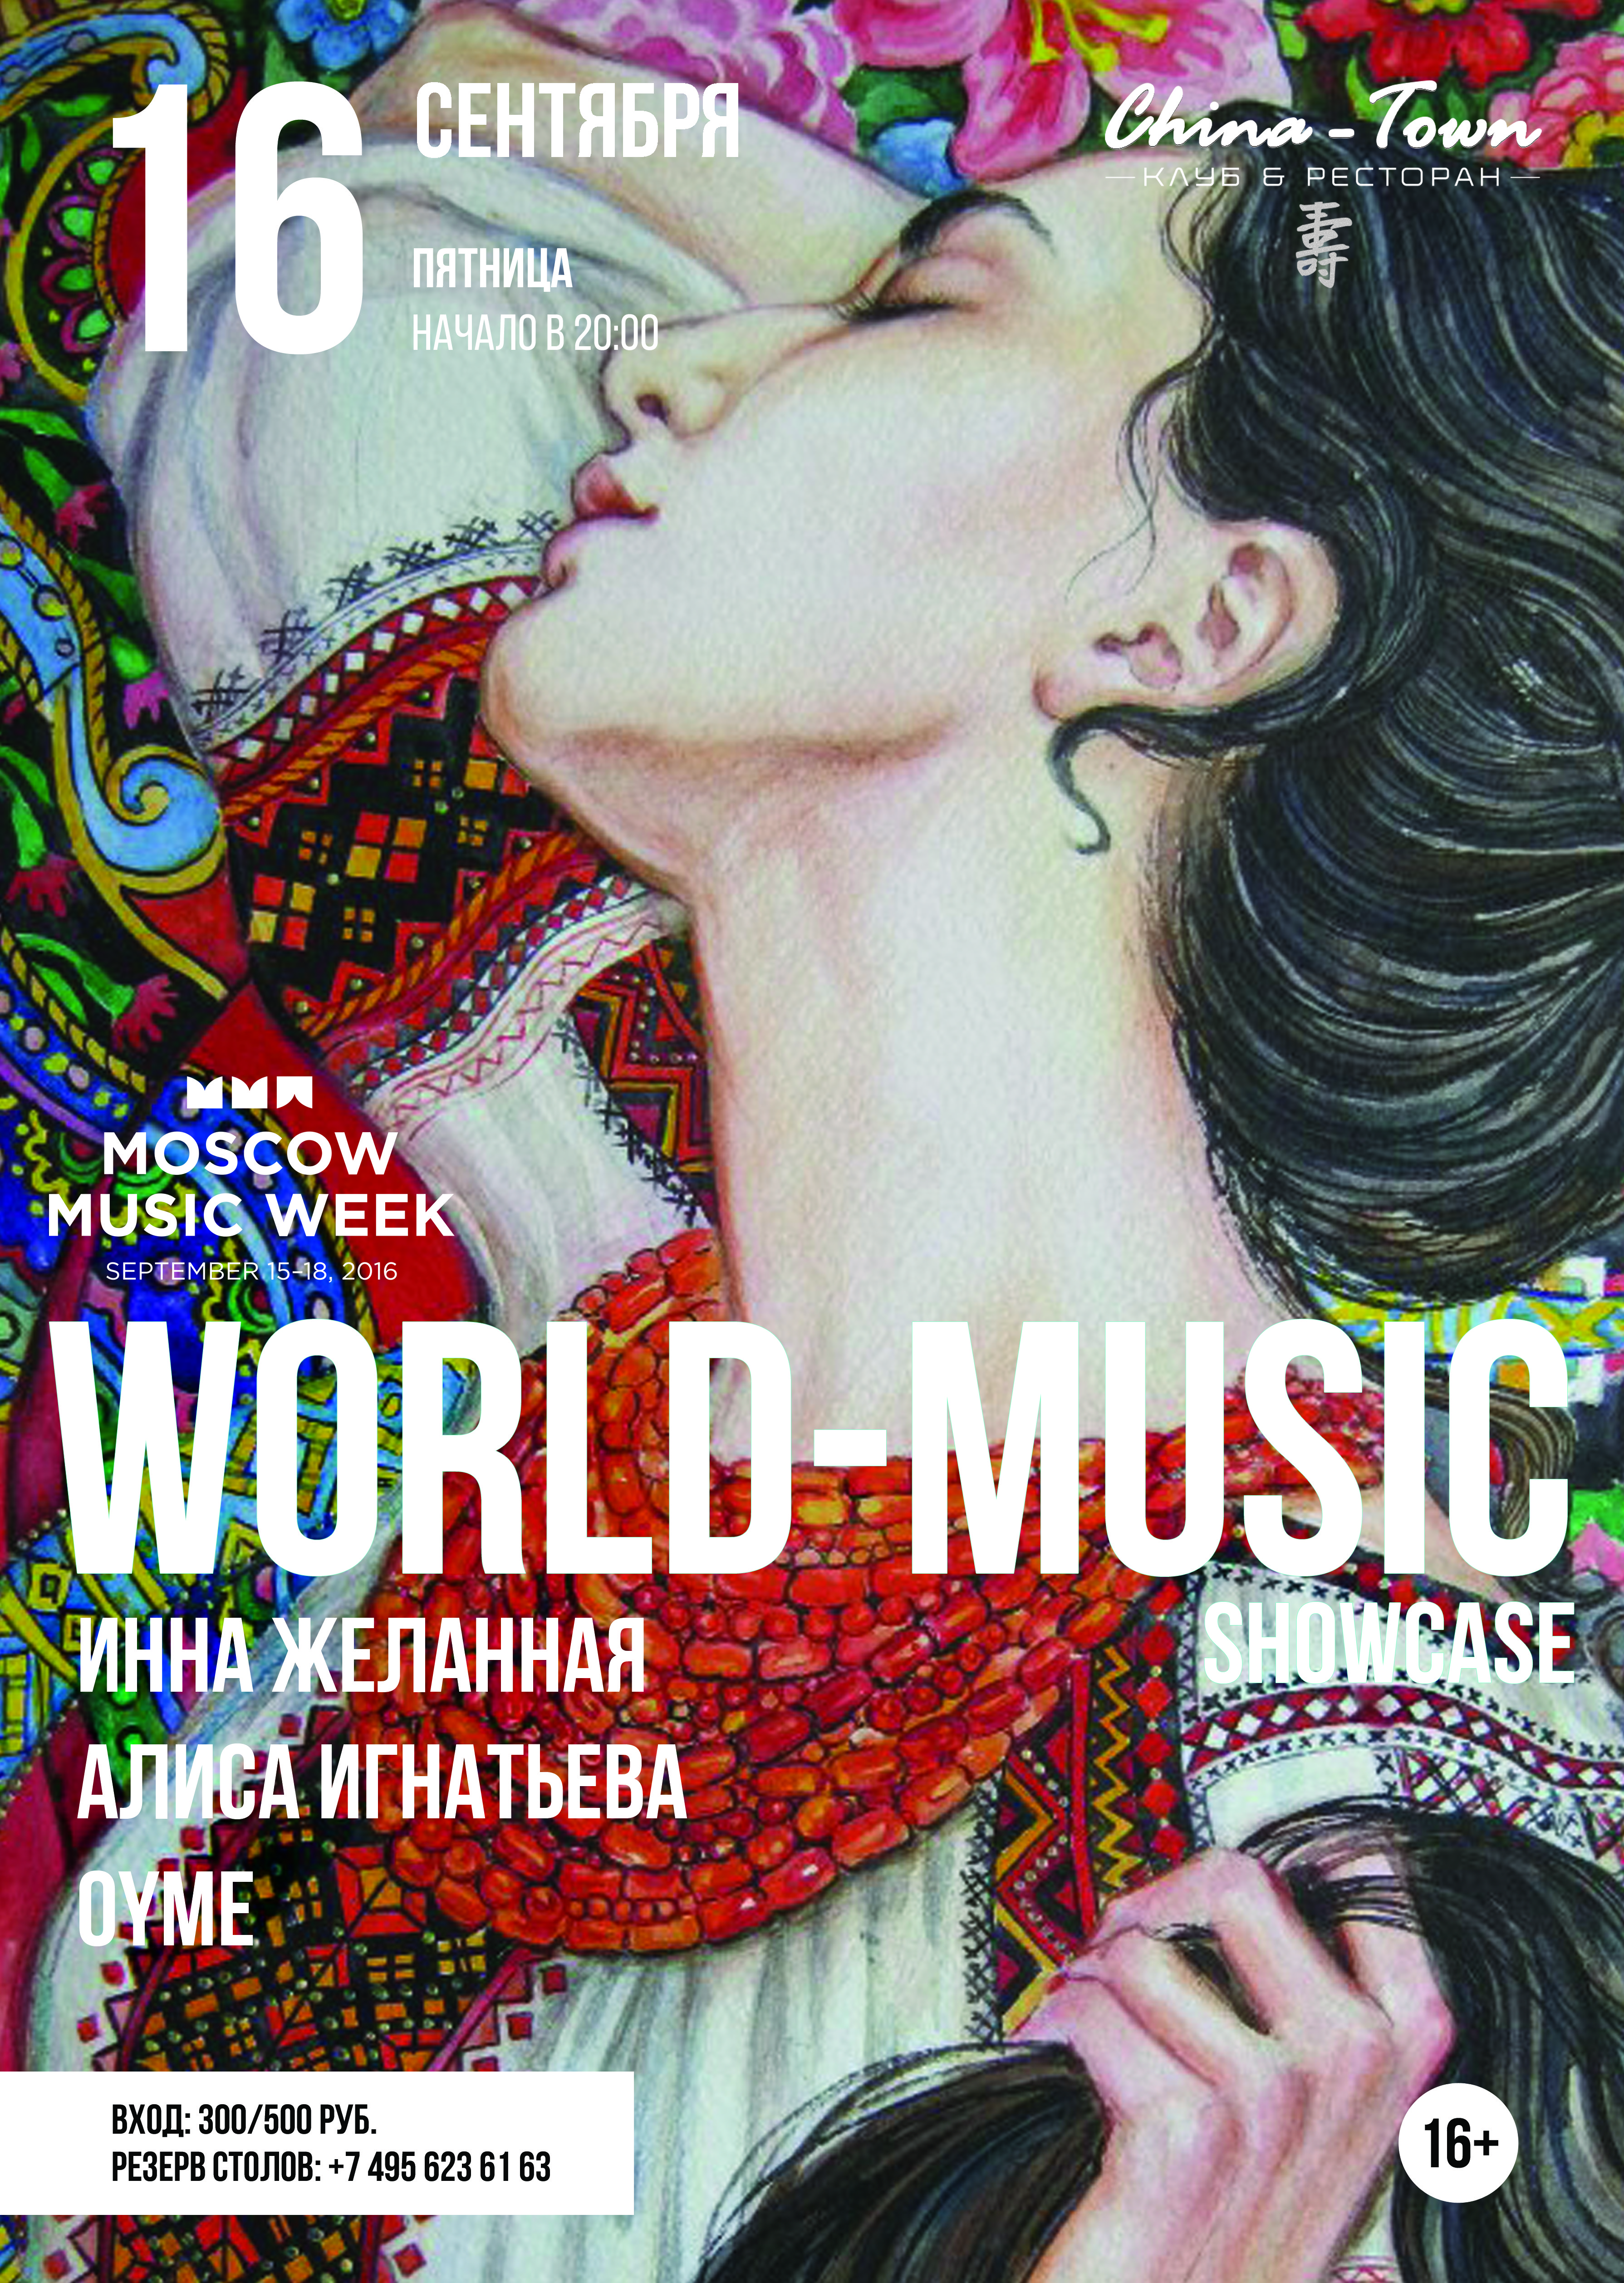 moscow music week 2016, шоукейс, oyme, инна желанная